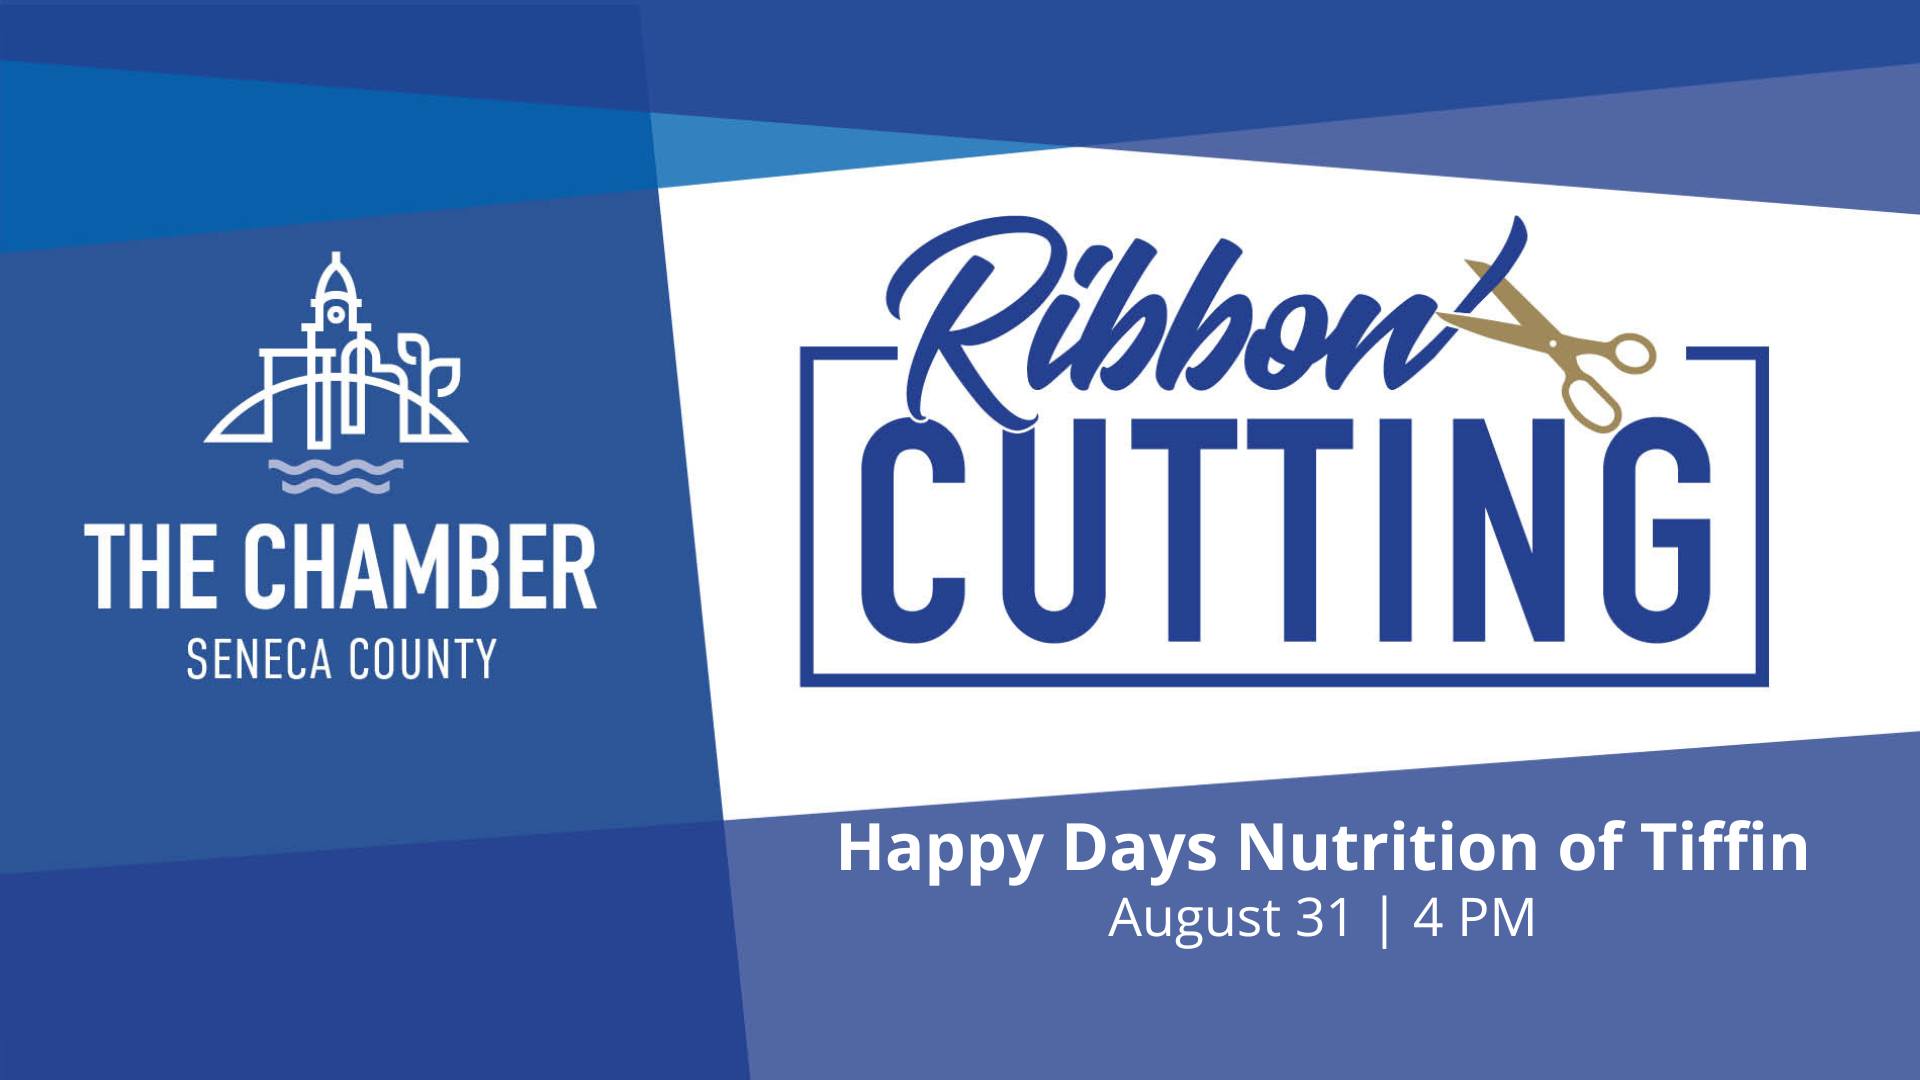 Seneca Regional Chamber | Ribbon Cutting for Happy Days Nutrition of Tiffin